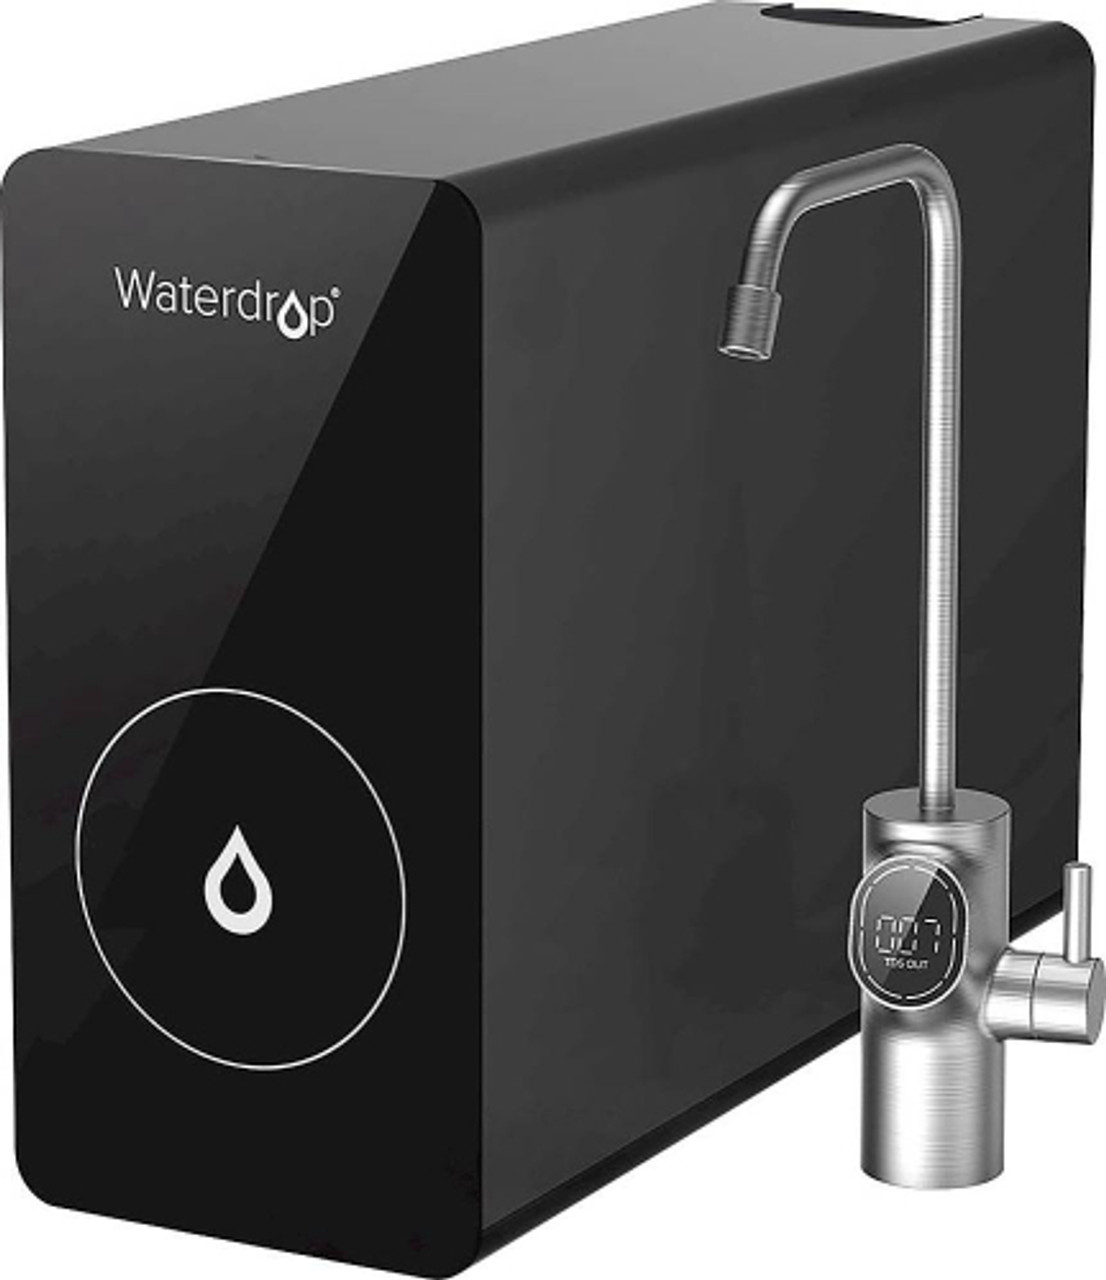 Waterdrop - D6 Reverse Osmosis Water Filter System - Black